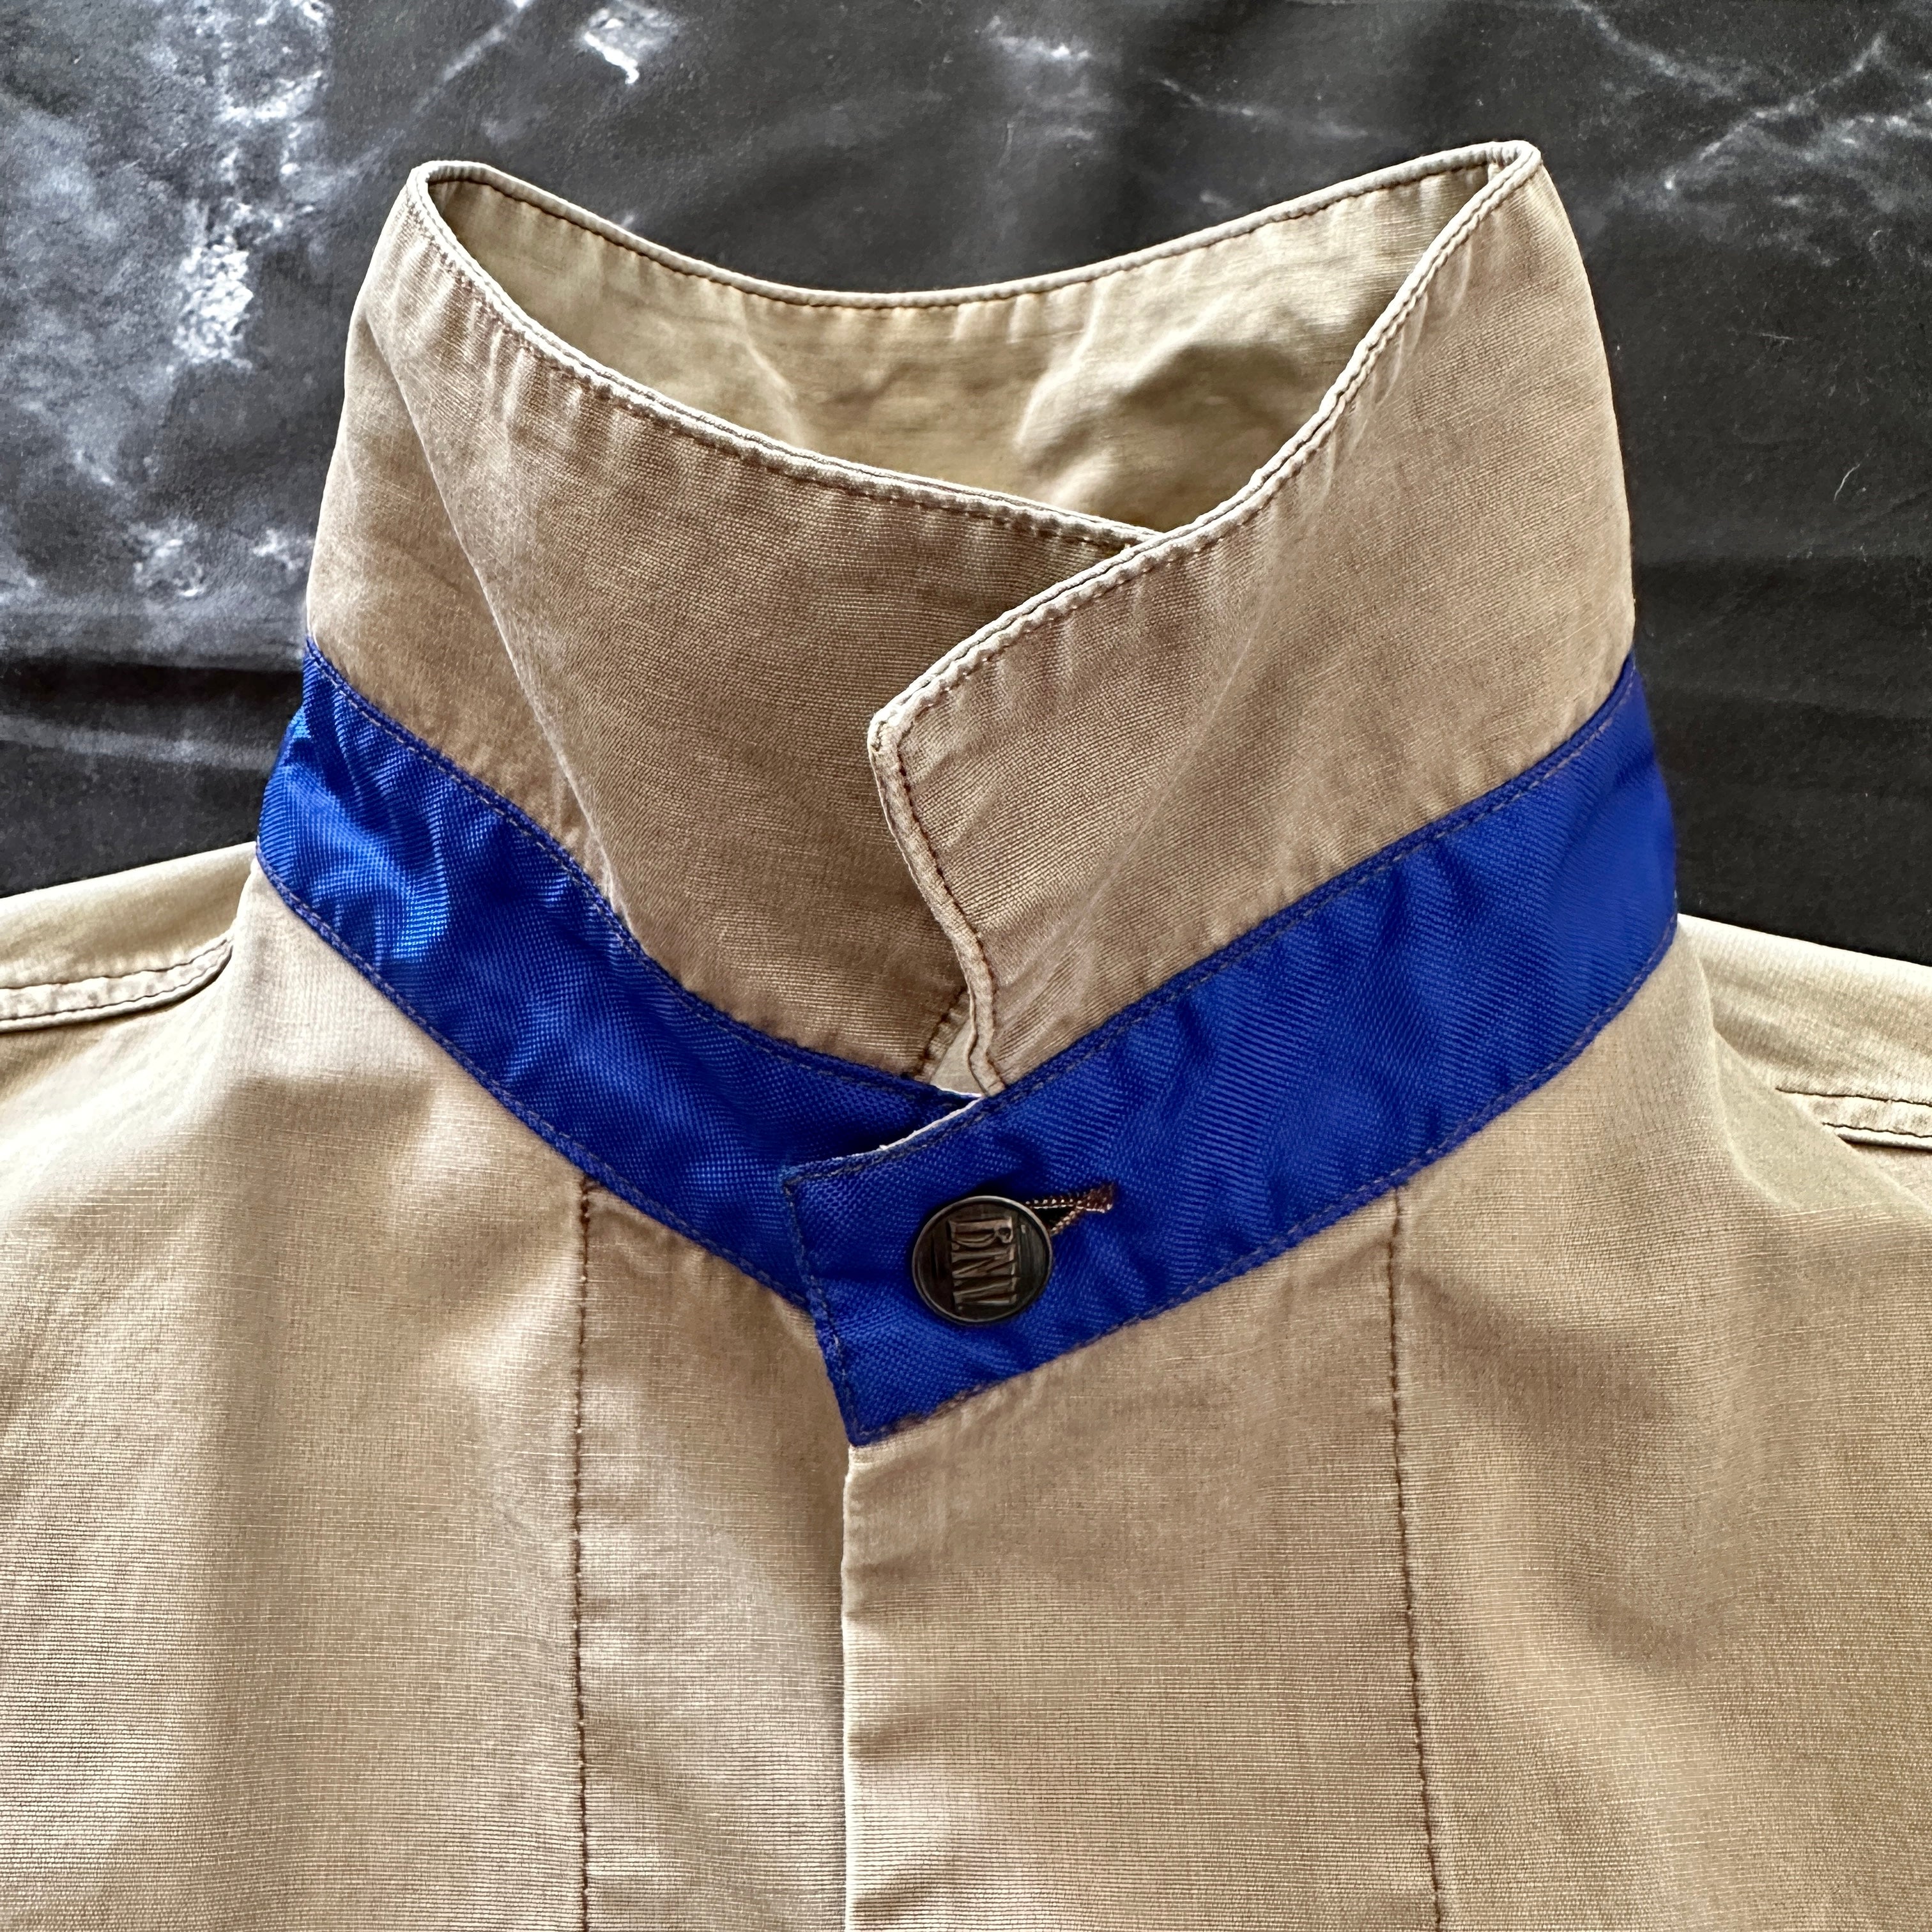 Boneville Vintage 80s Jacket - 44 / L - Made in Italy